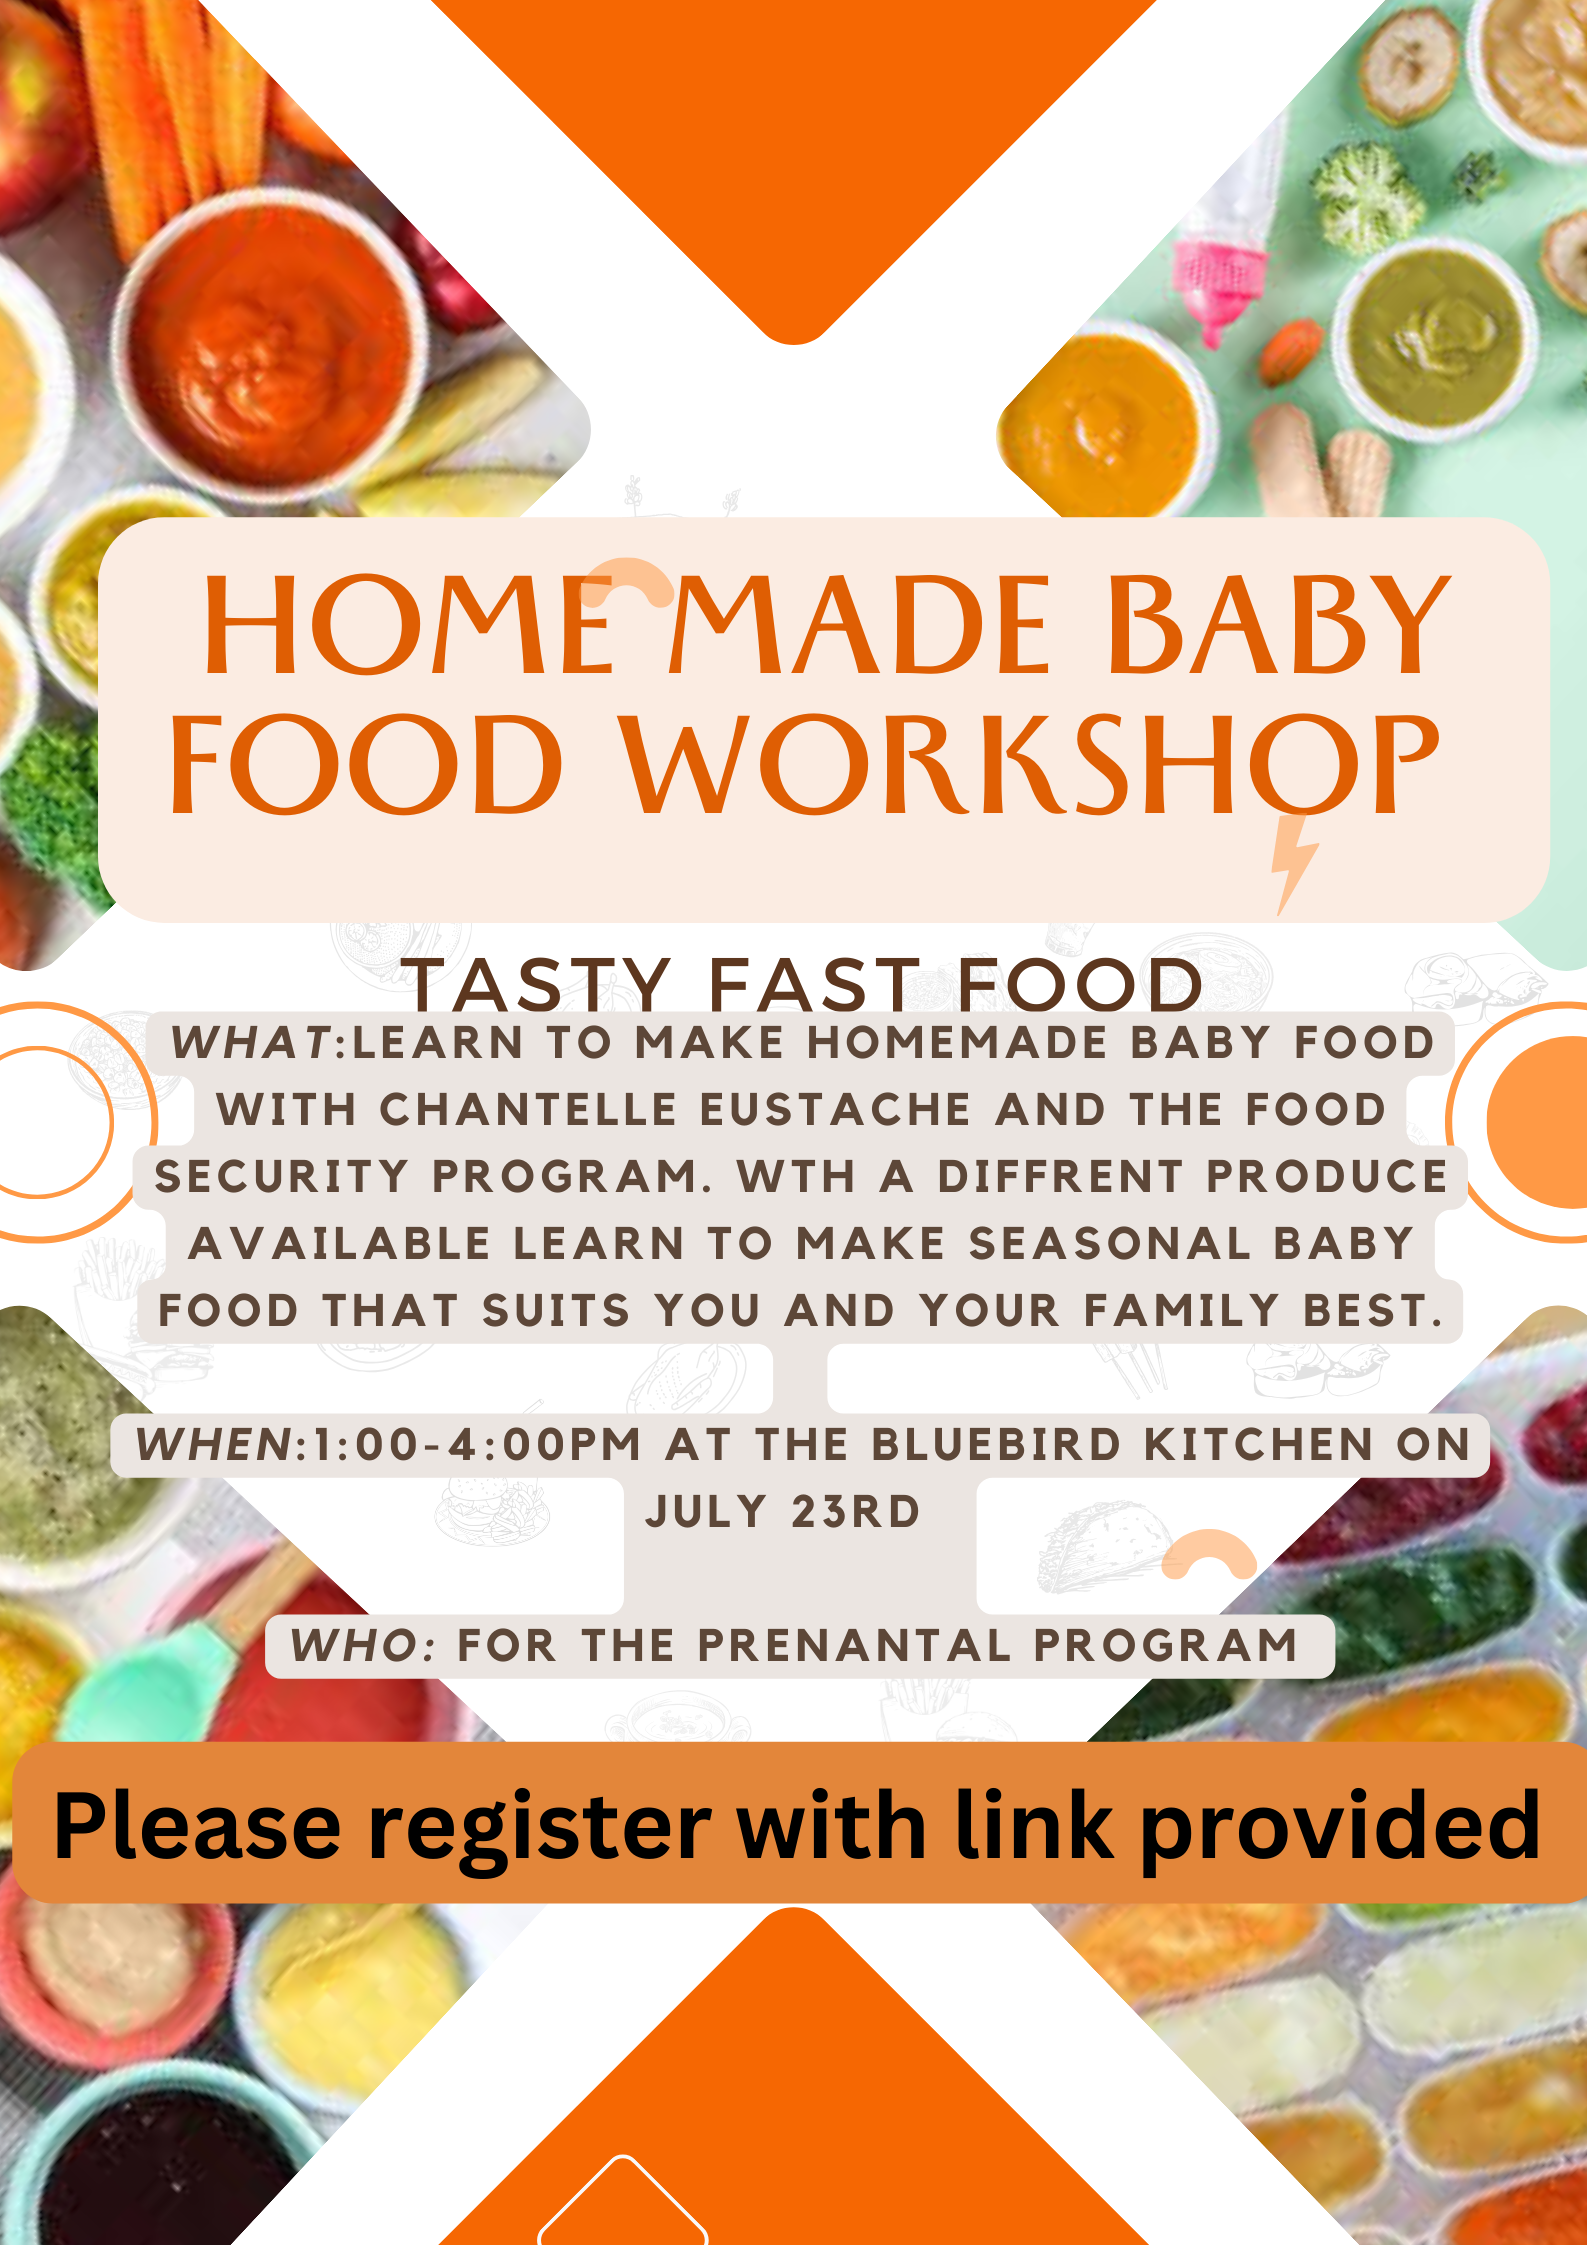 Prenatal program notice: Baby food making workshop